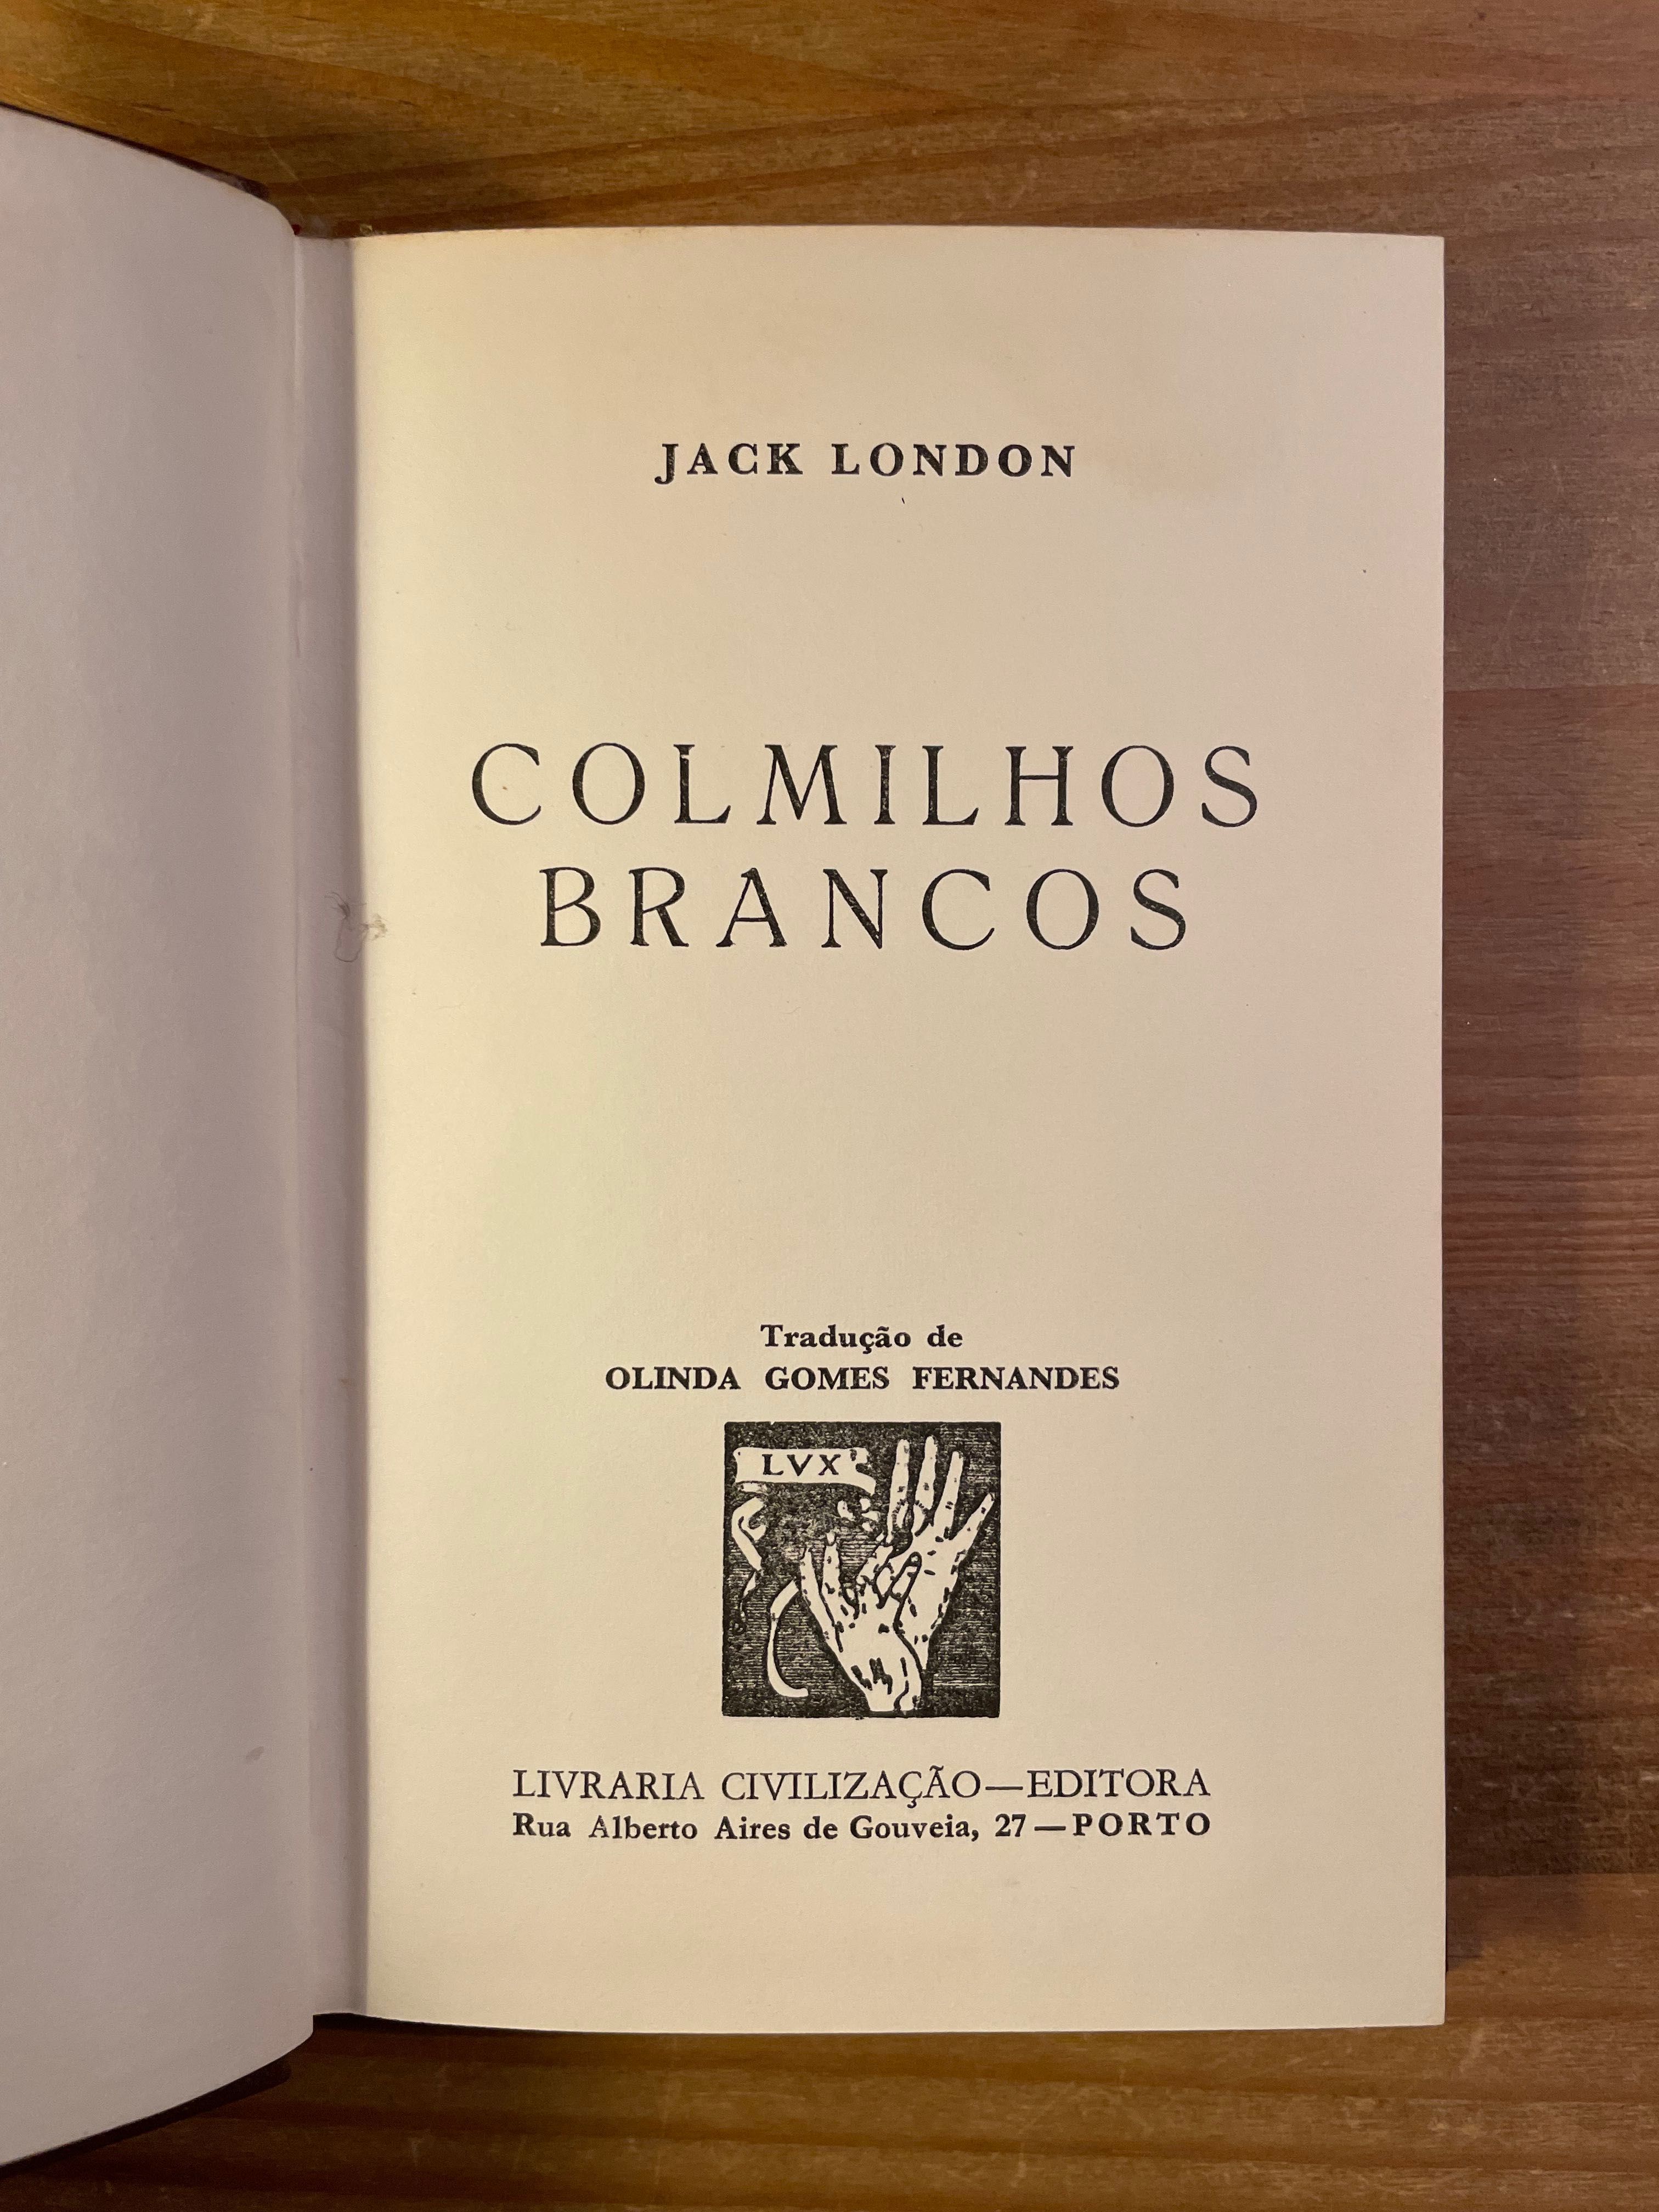 Colmilhos Brancos - Jack London (portes grátis)